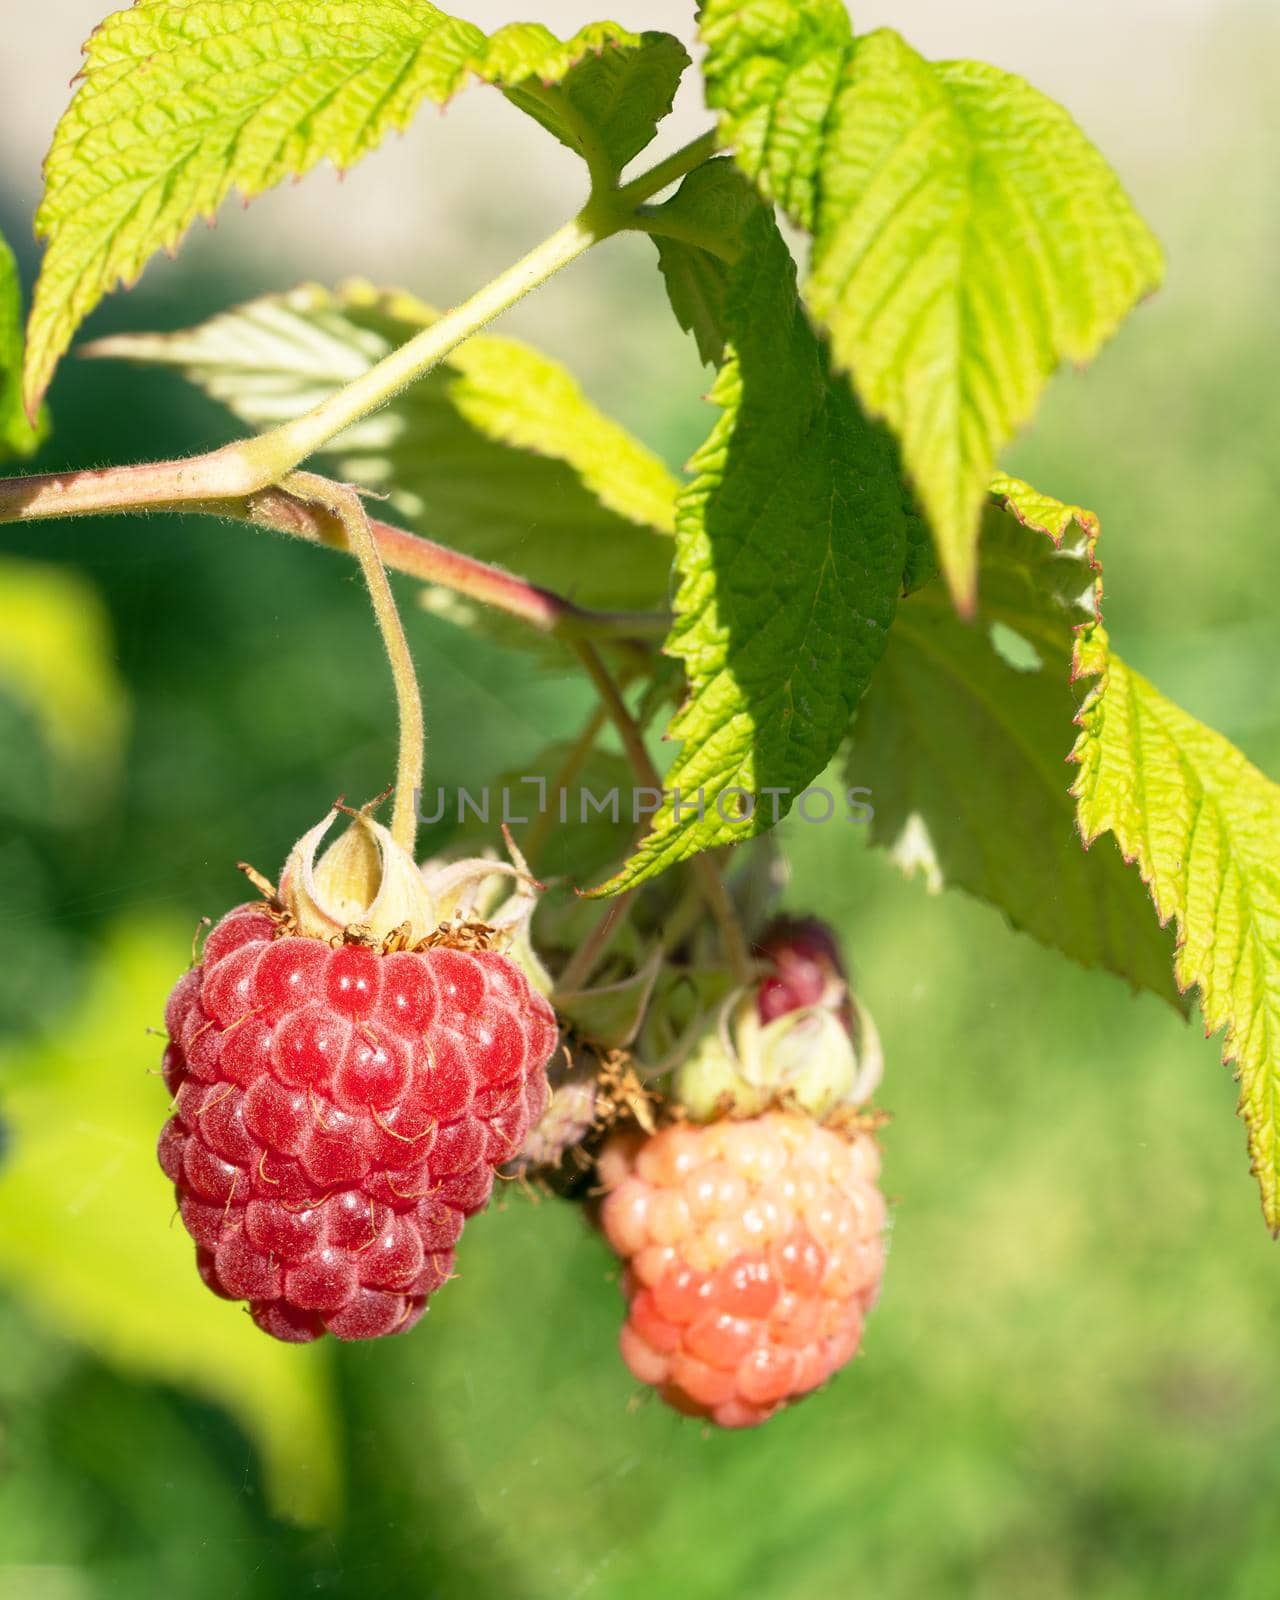 Raspberry (Rubus idaeus), fruits of summertime